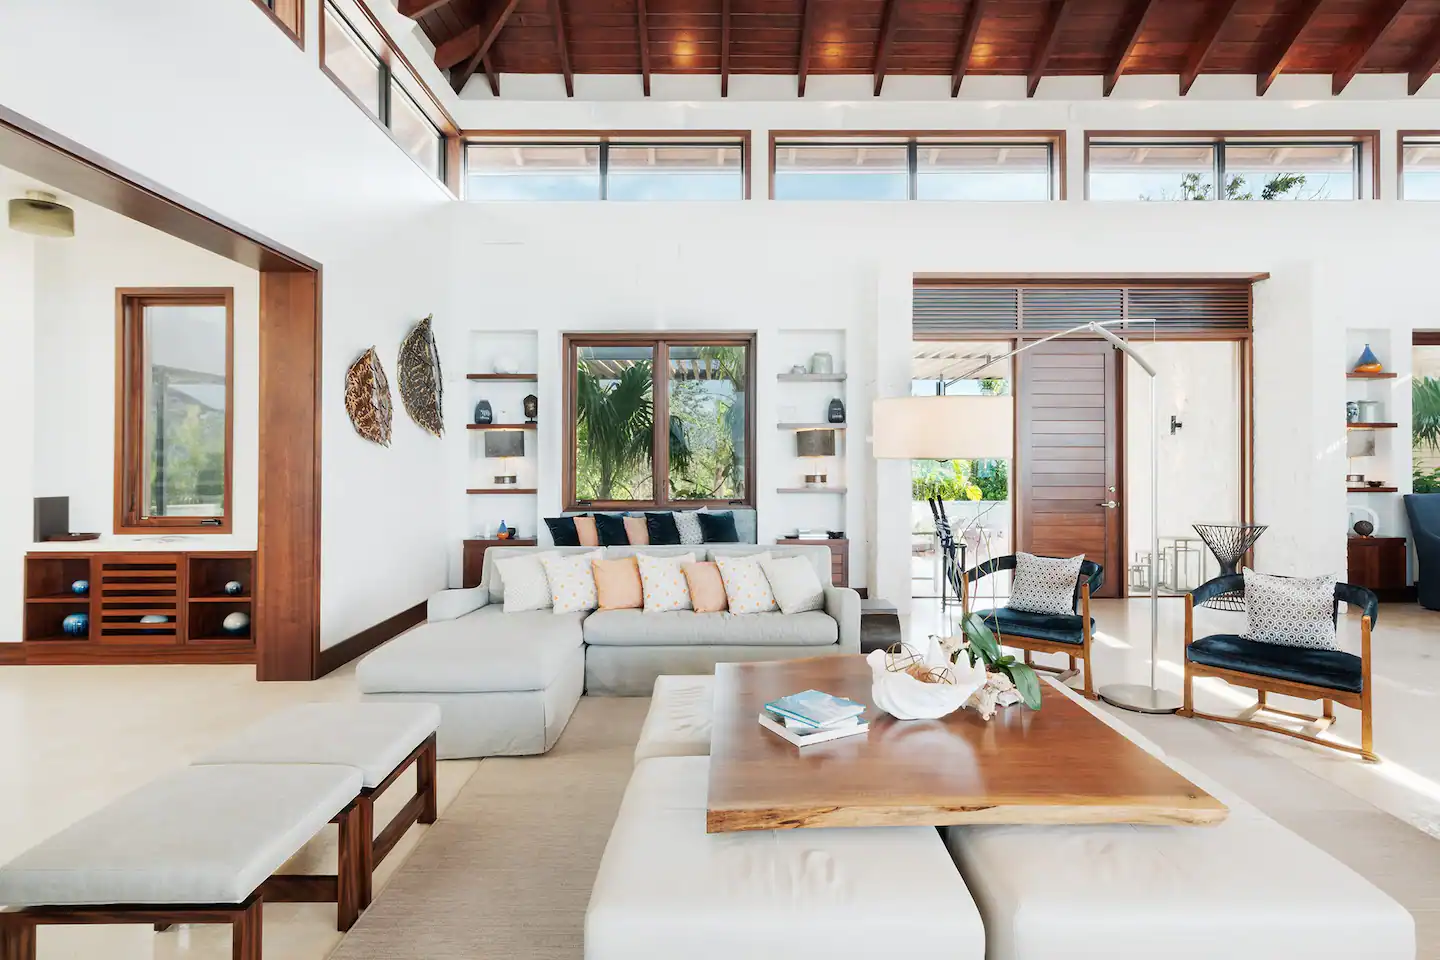 A spacious and elegant living room featuring comfy sofas.